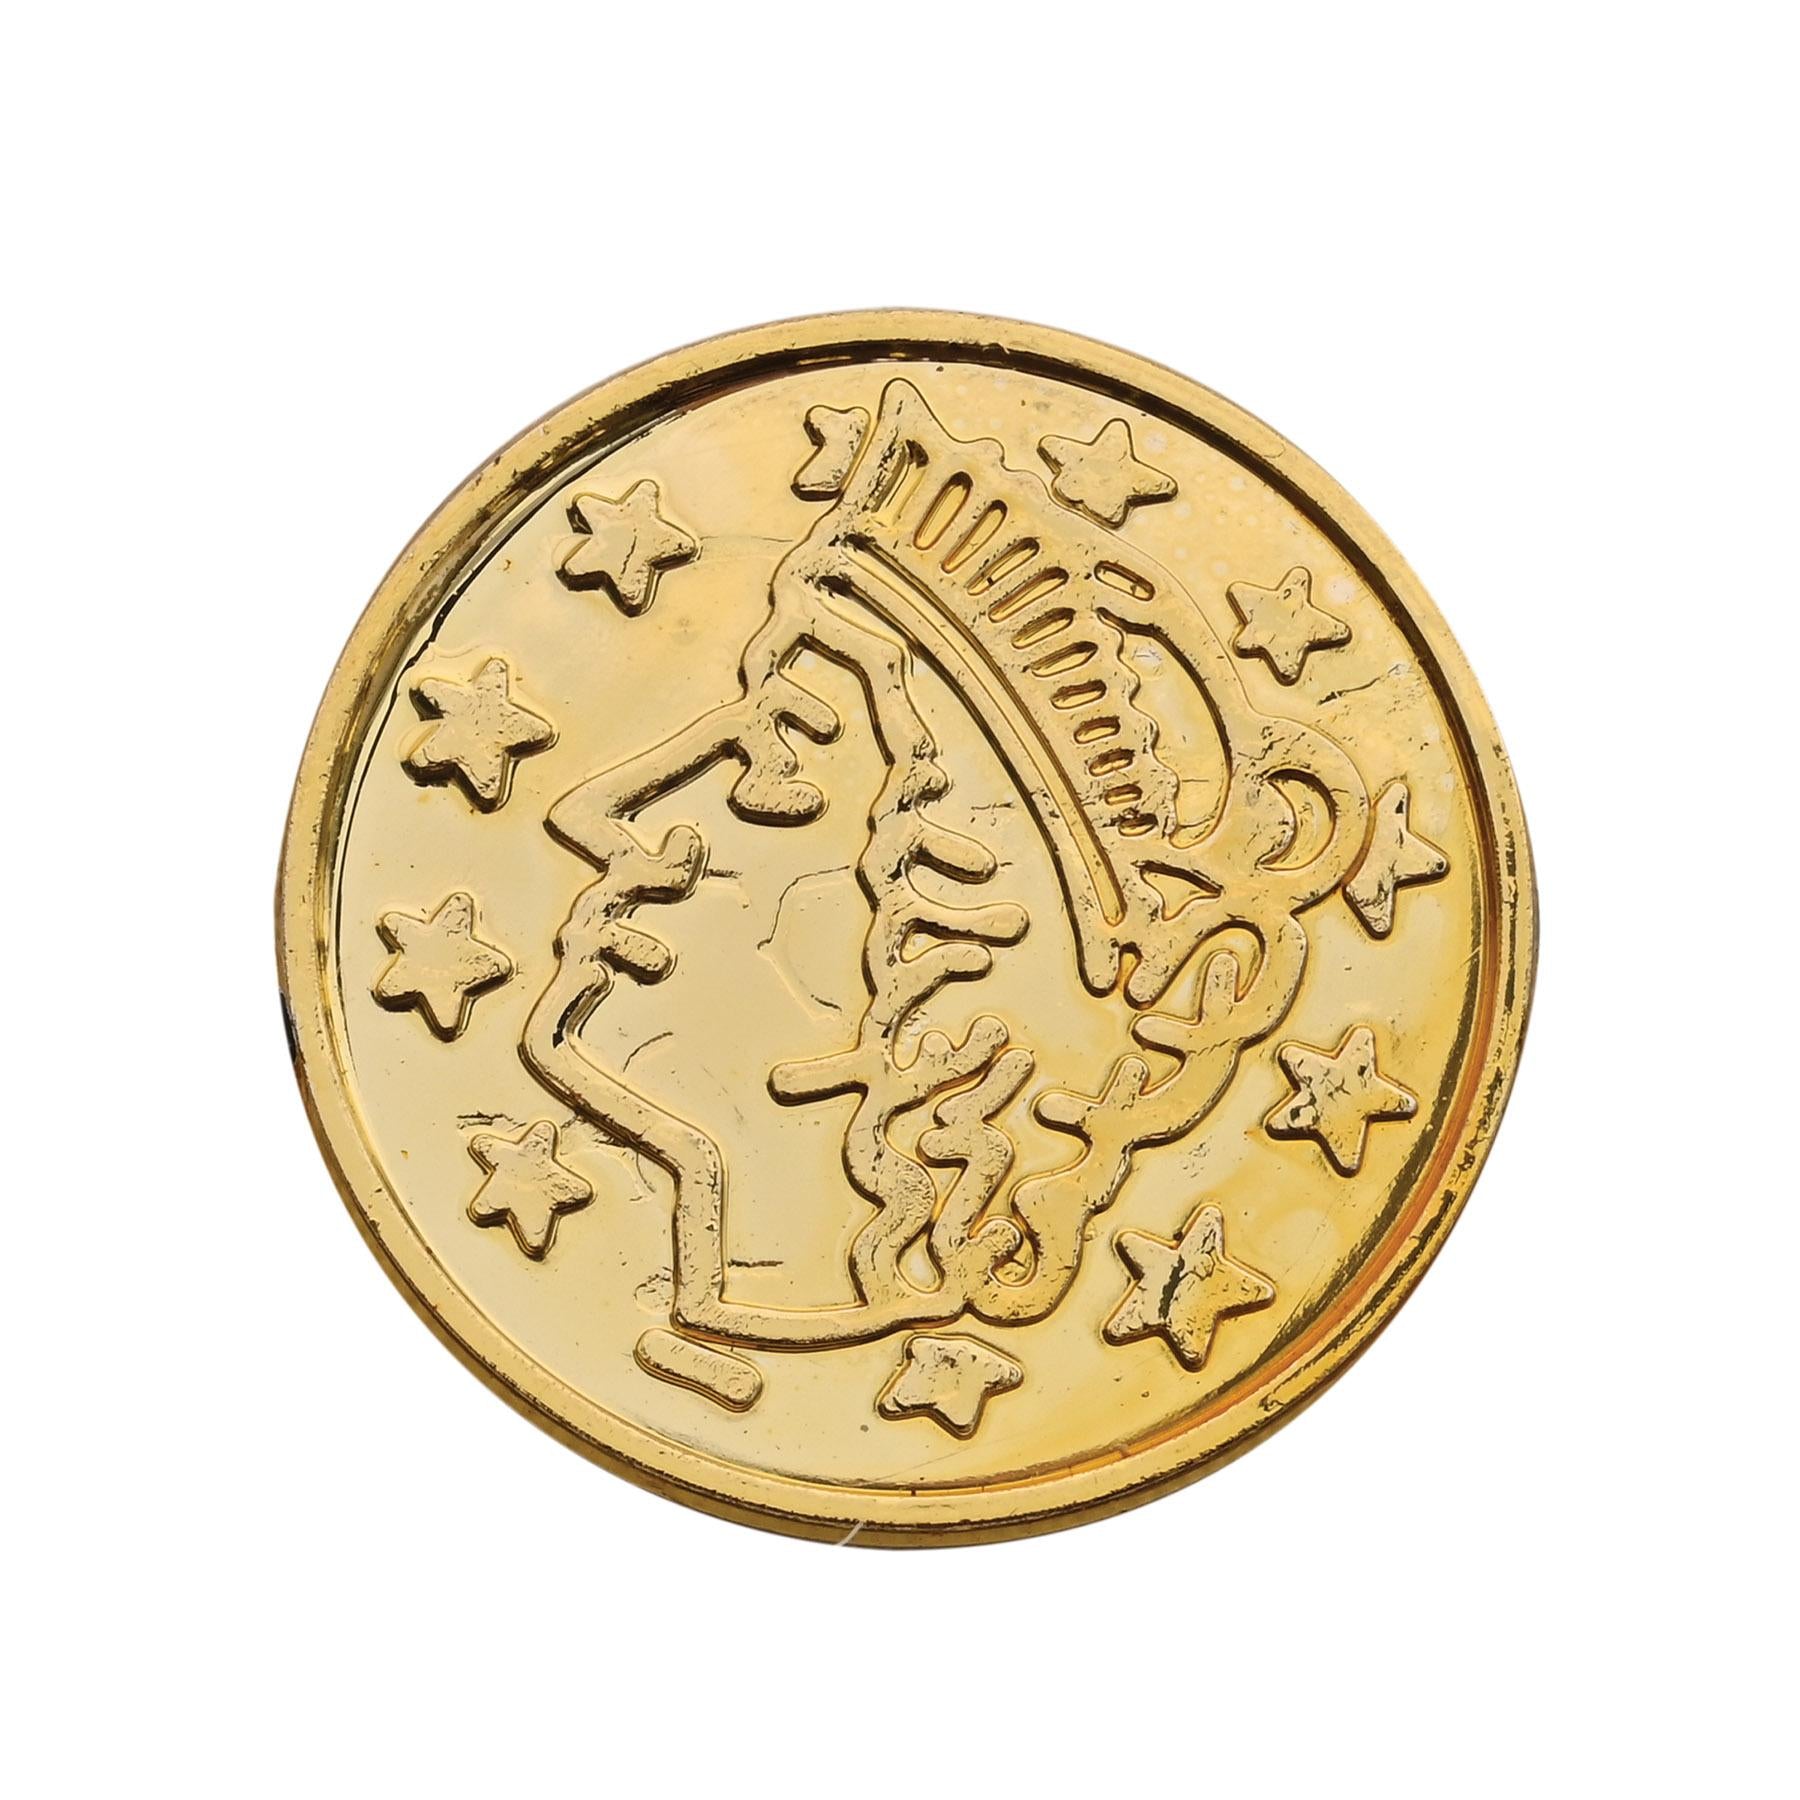 Beistle Plastic Party Coins - gold (100/Pkg)